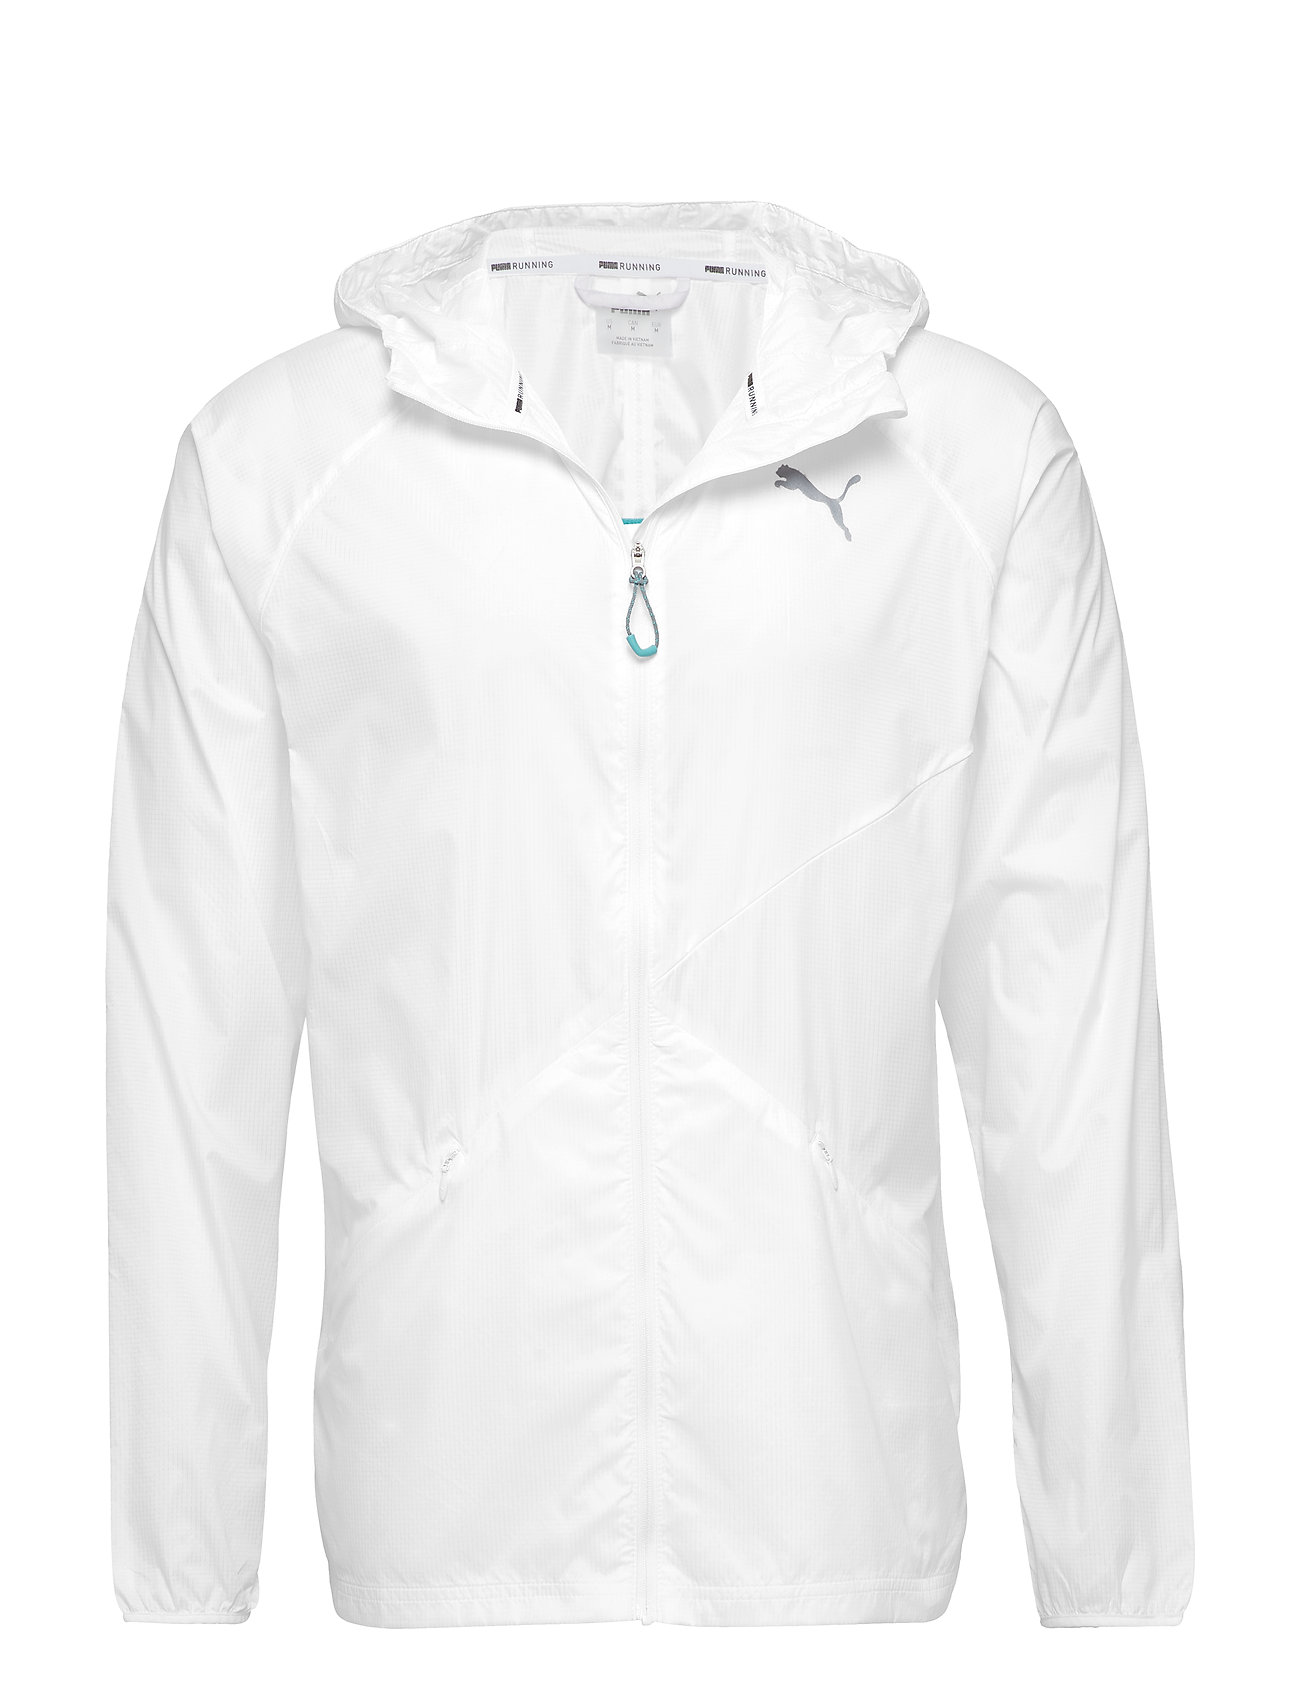 puma white jackets